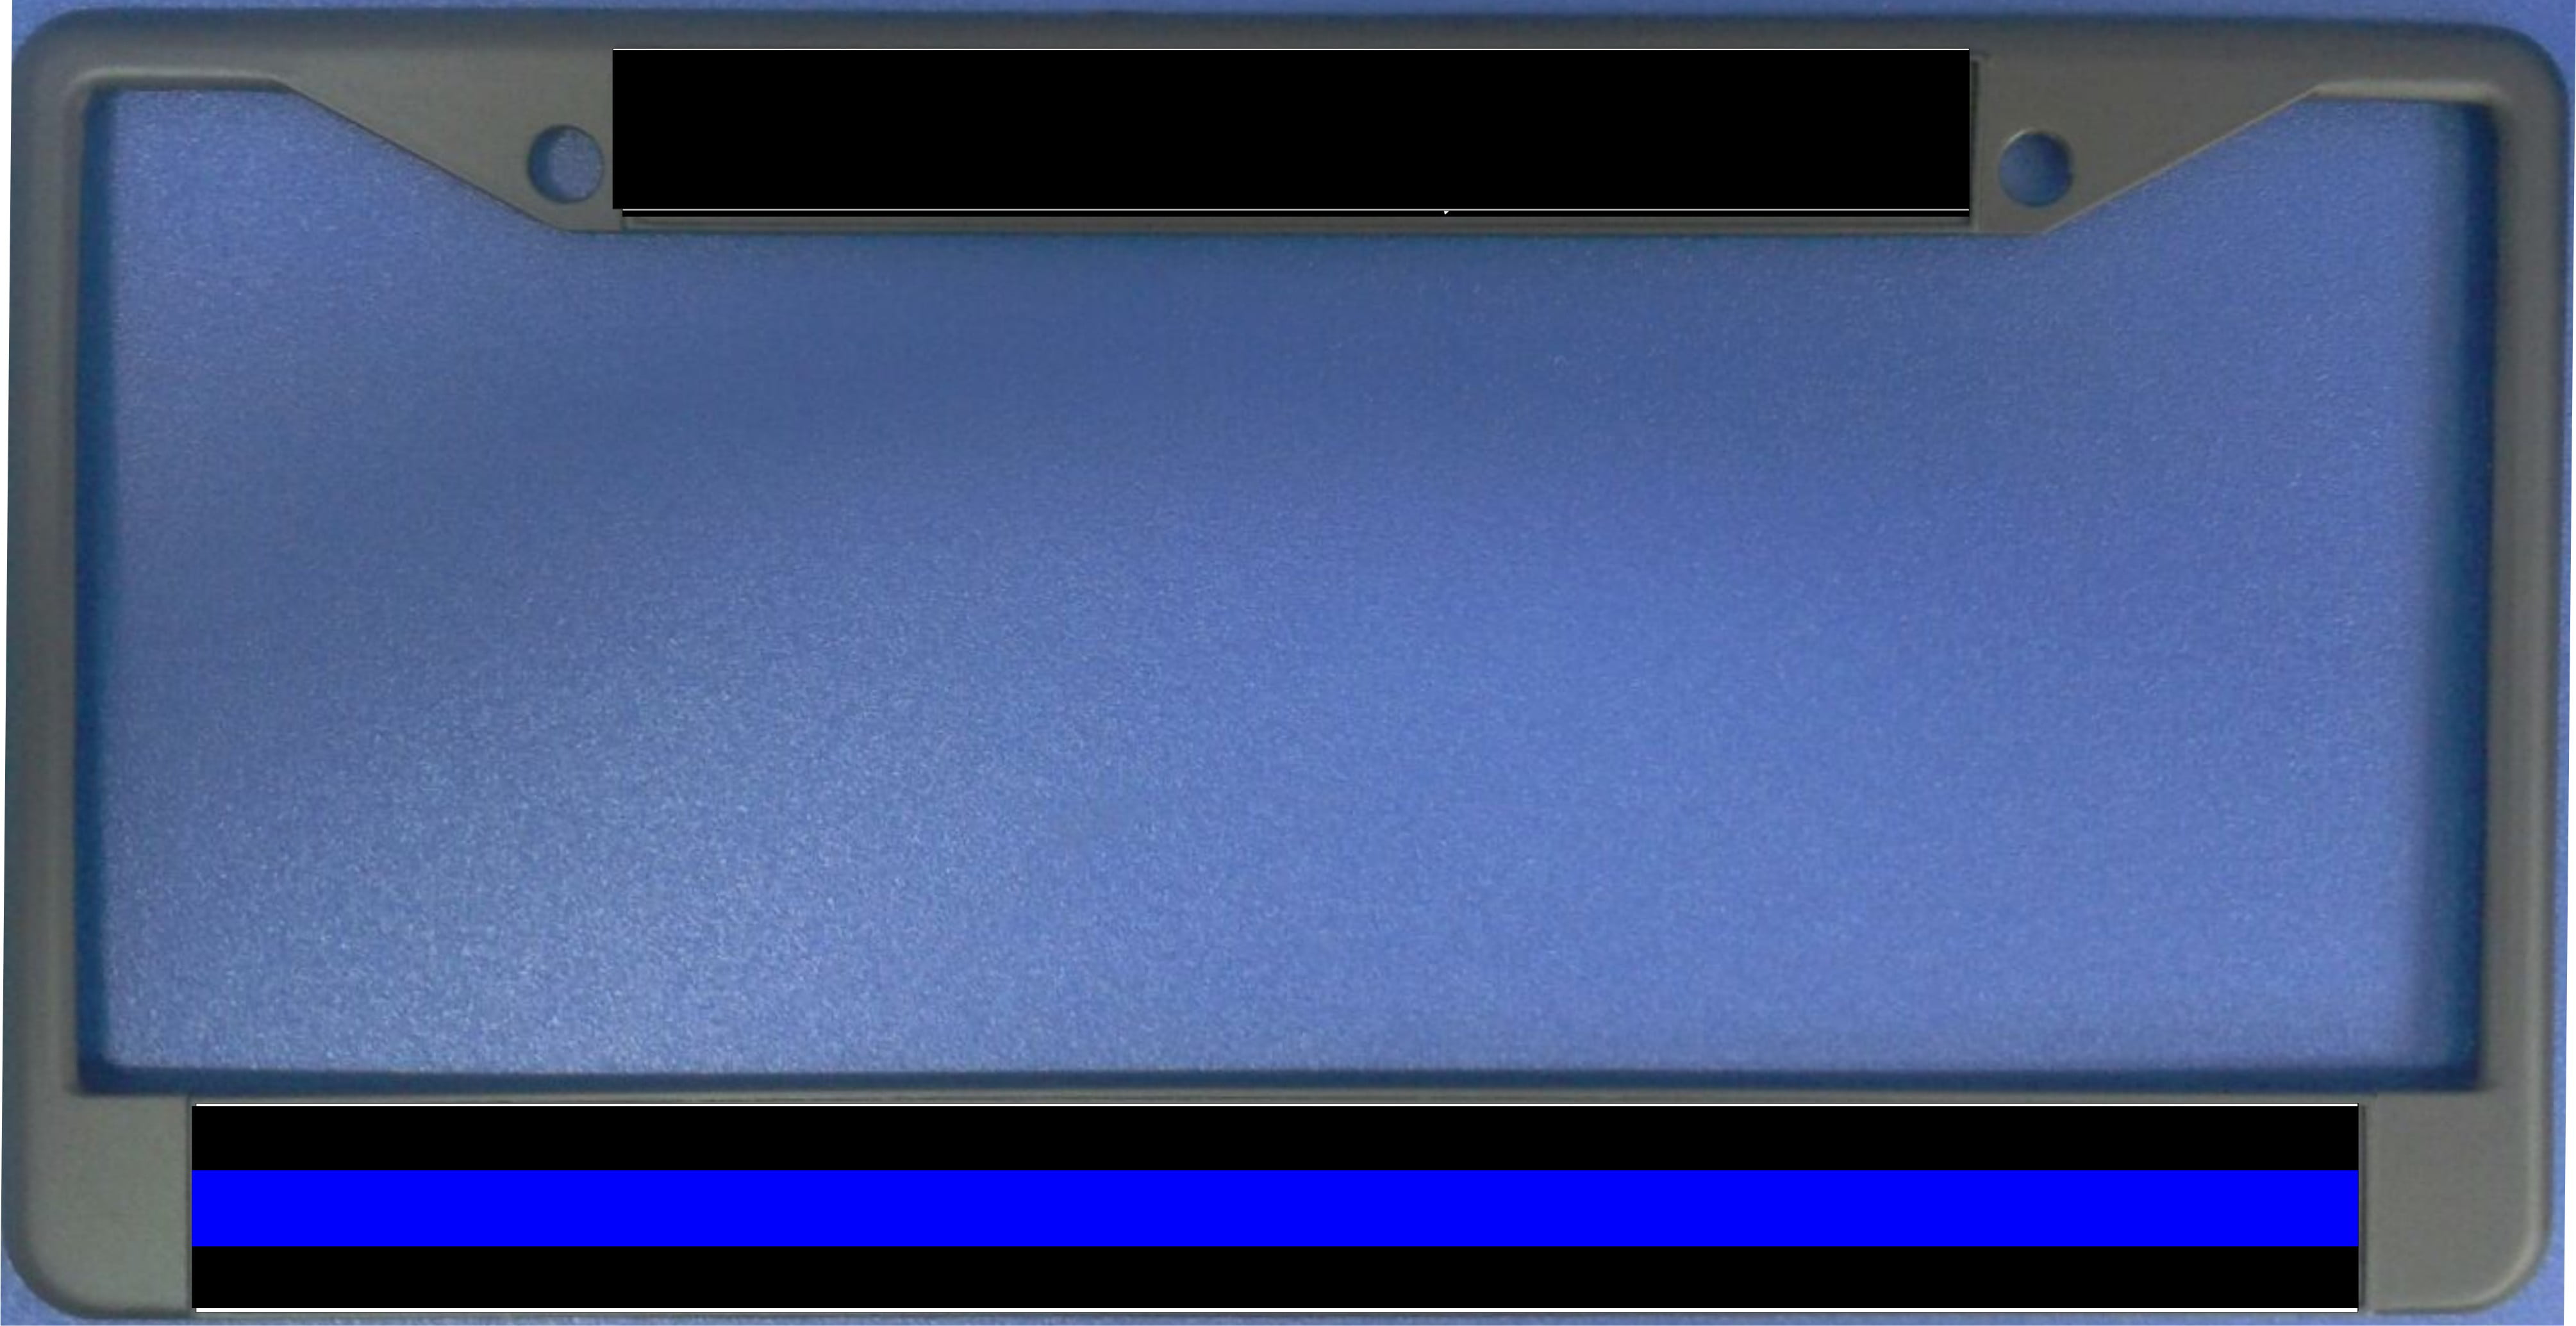 BIN SHANG Reflective Thin Blue Line Support Police Black License Plate Frame Top N Bottom